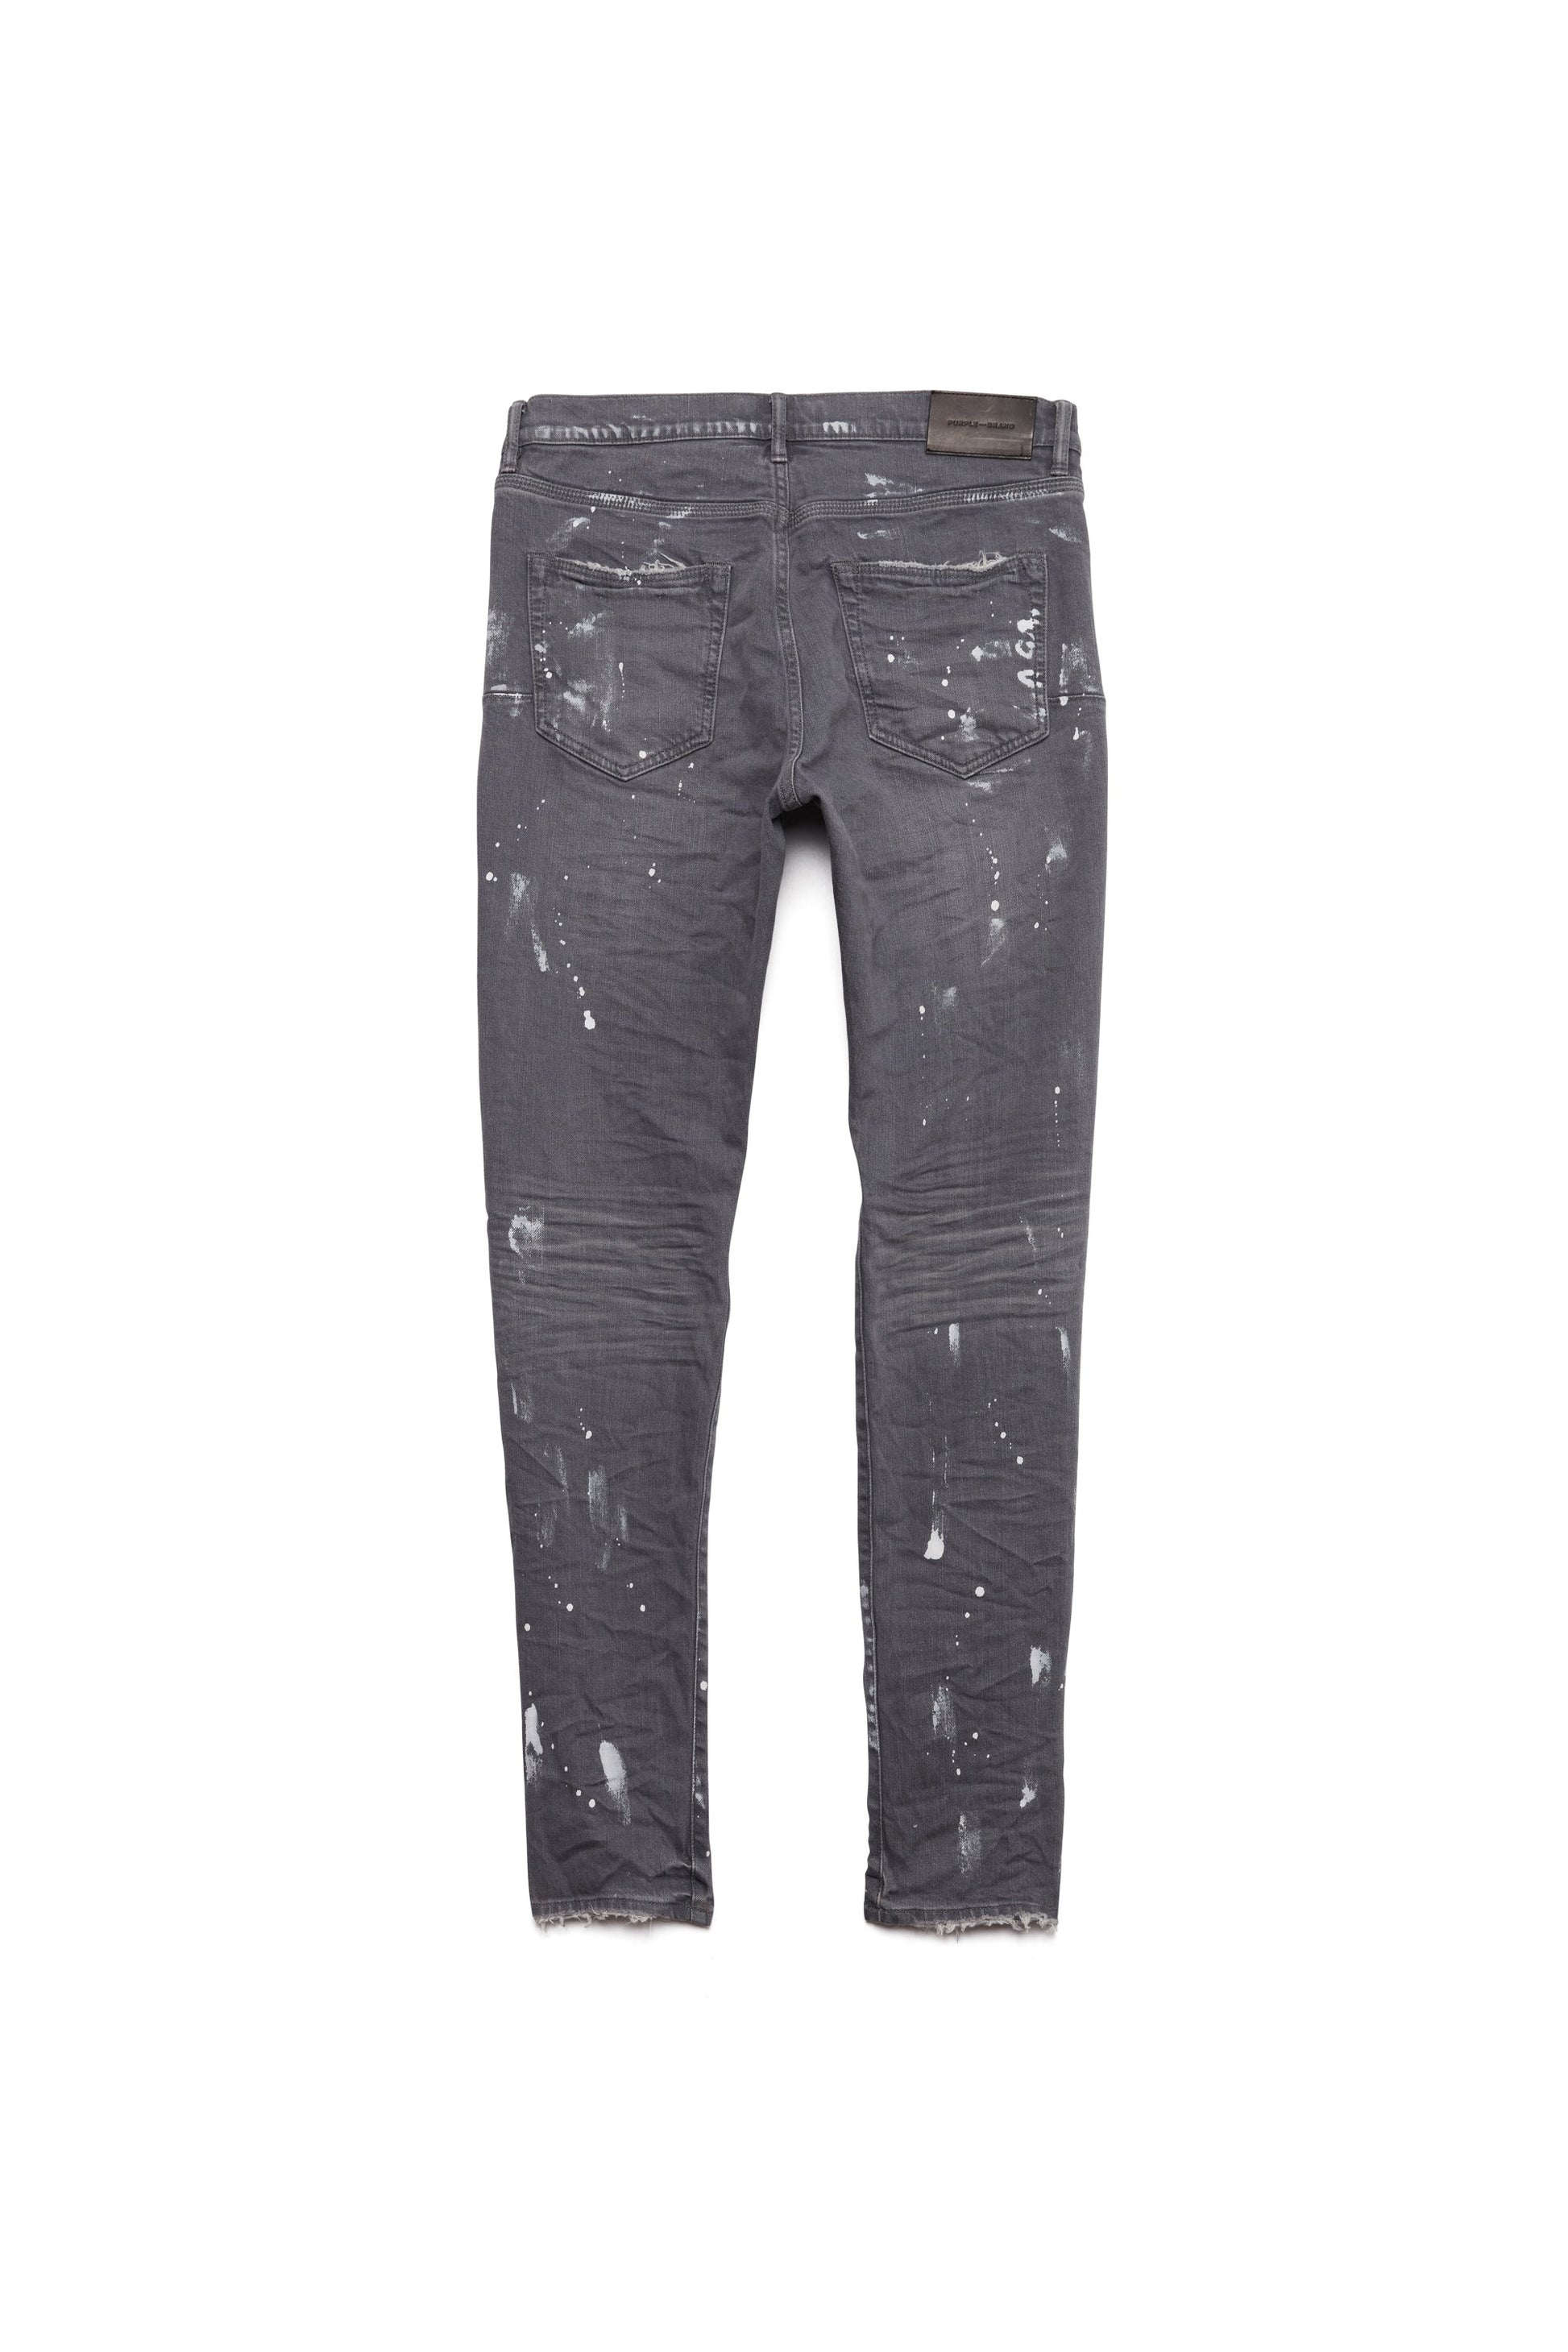 Purple Brand Men's Paint Splatter Jeans